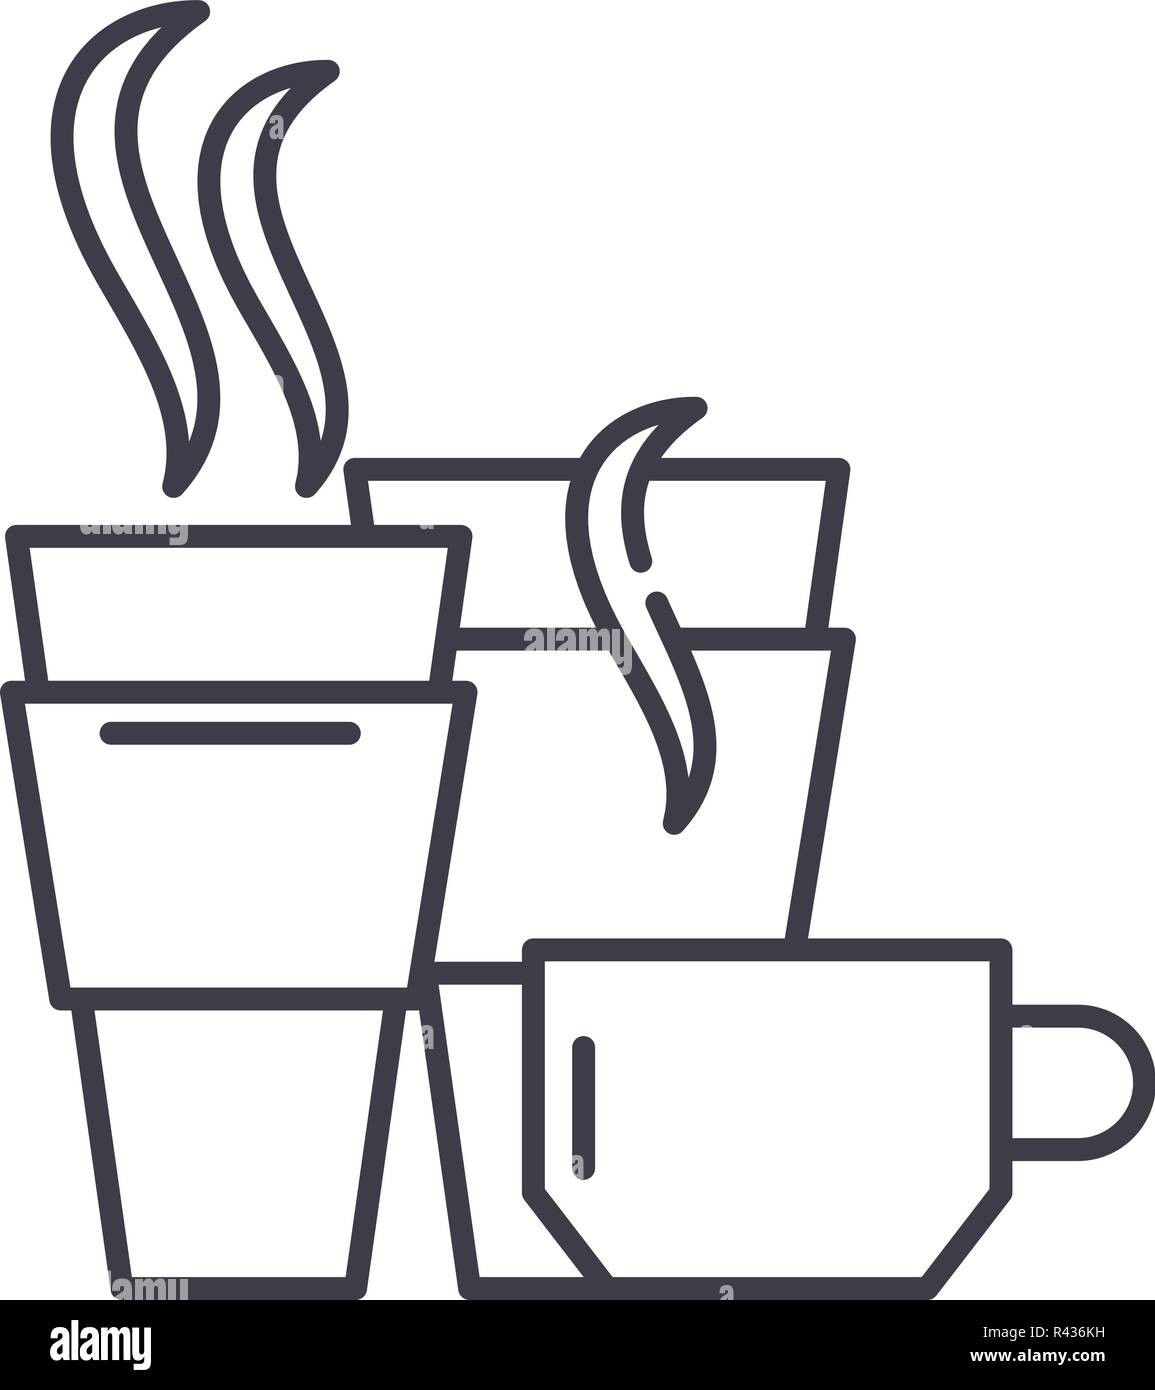 https://c8.alamy.com/comp/R436KH/hot-drinks-line-icon-concept-hot-drinks-vector-linear-illustration-sign-symbol-R436KH.jpg